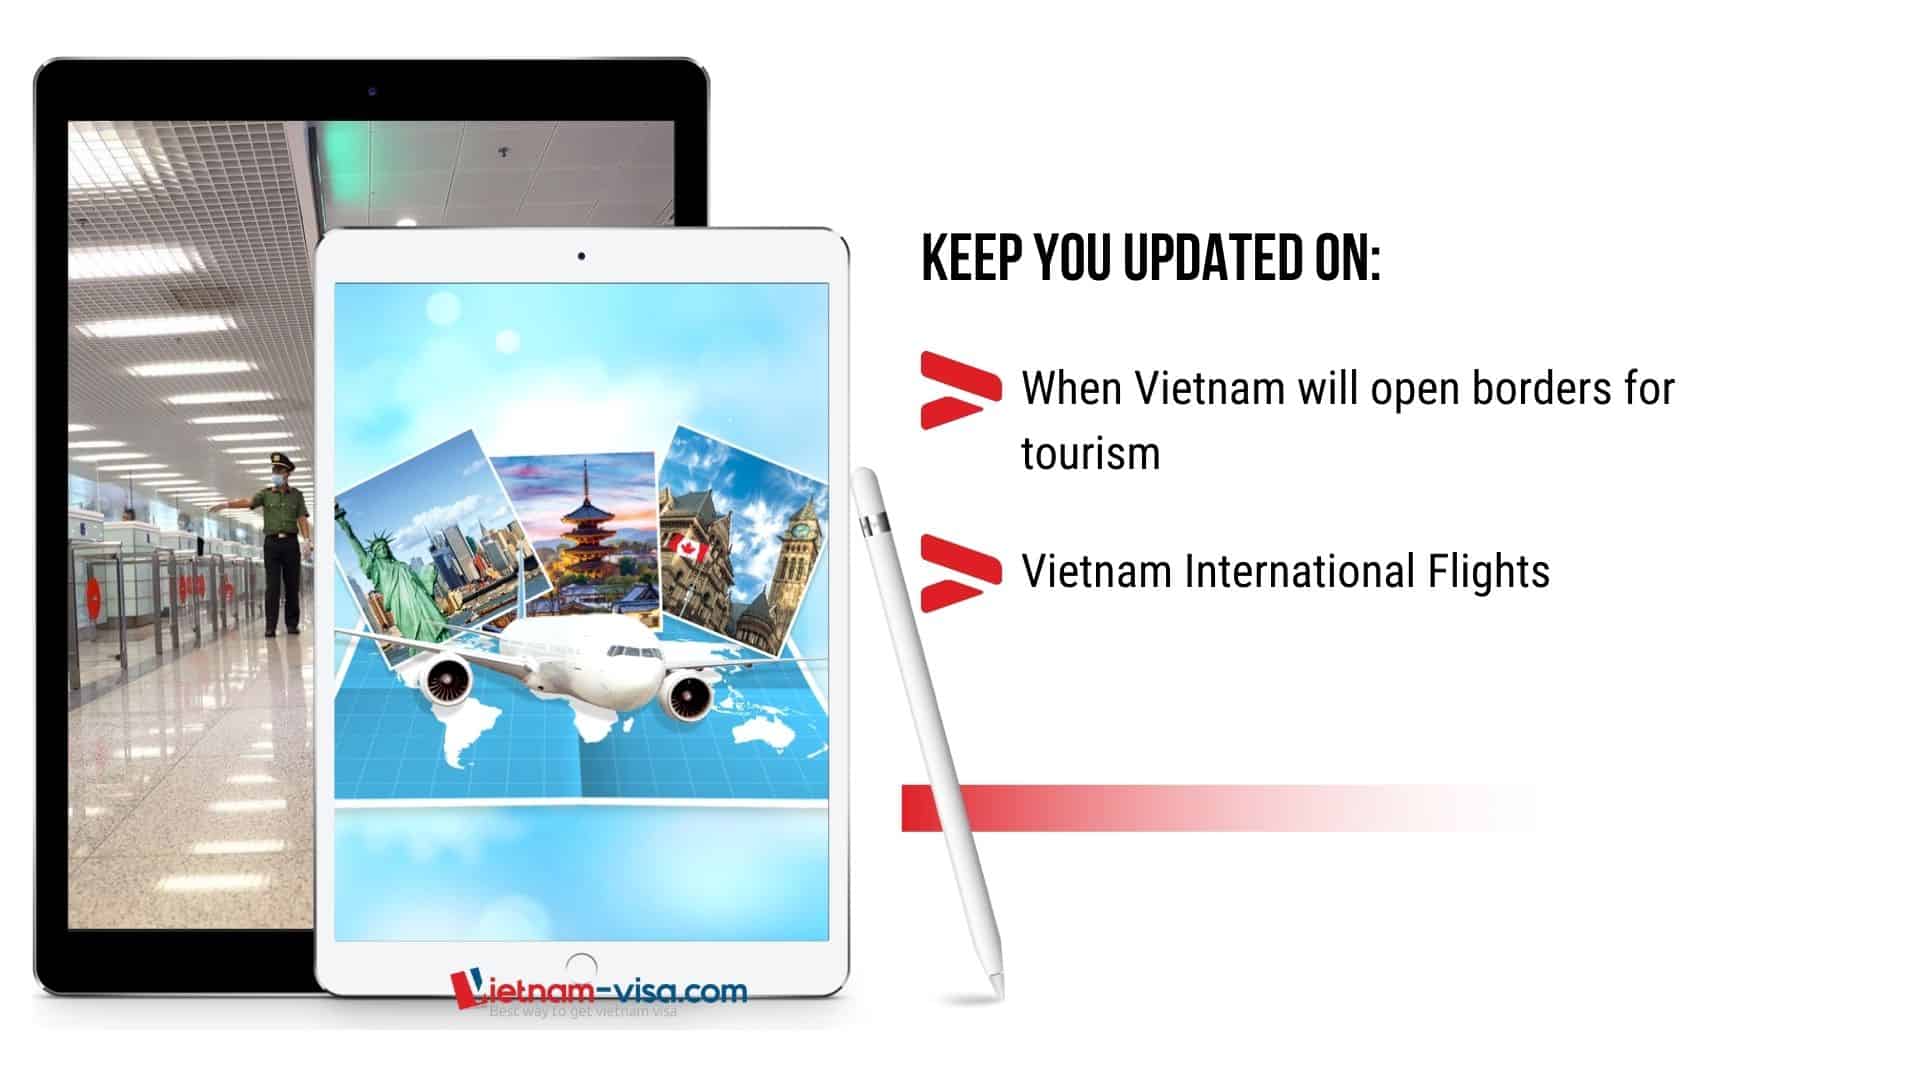 When will Vietnam open borders for tourism and Vietnam International Flights Update